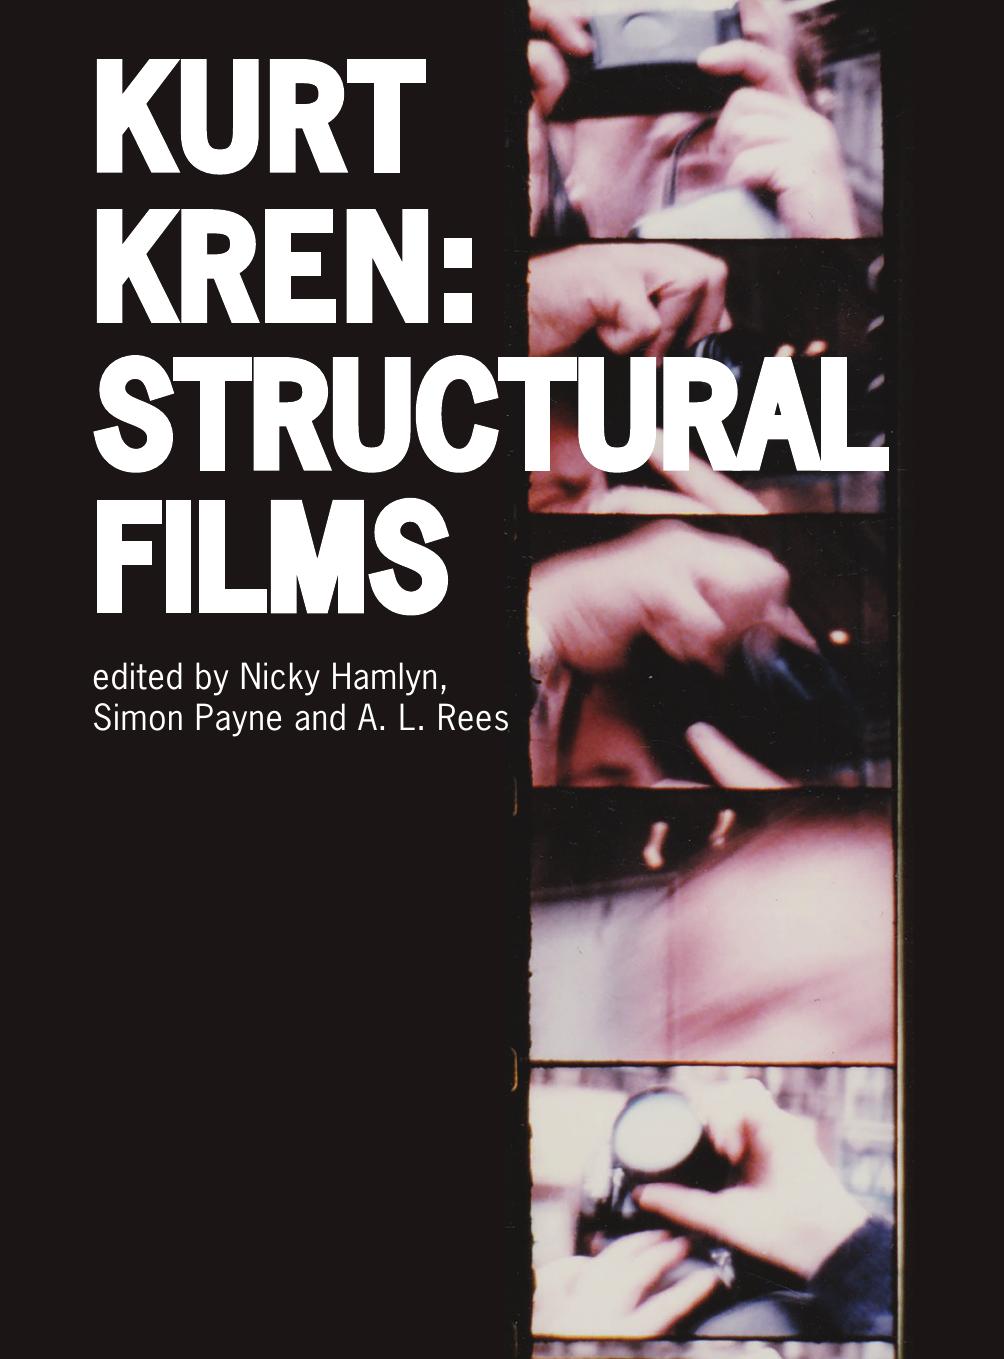 Kurt Kren : Structural Films by Nicky Hamlyn; Simon Payne; A. L. Rees